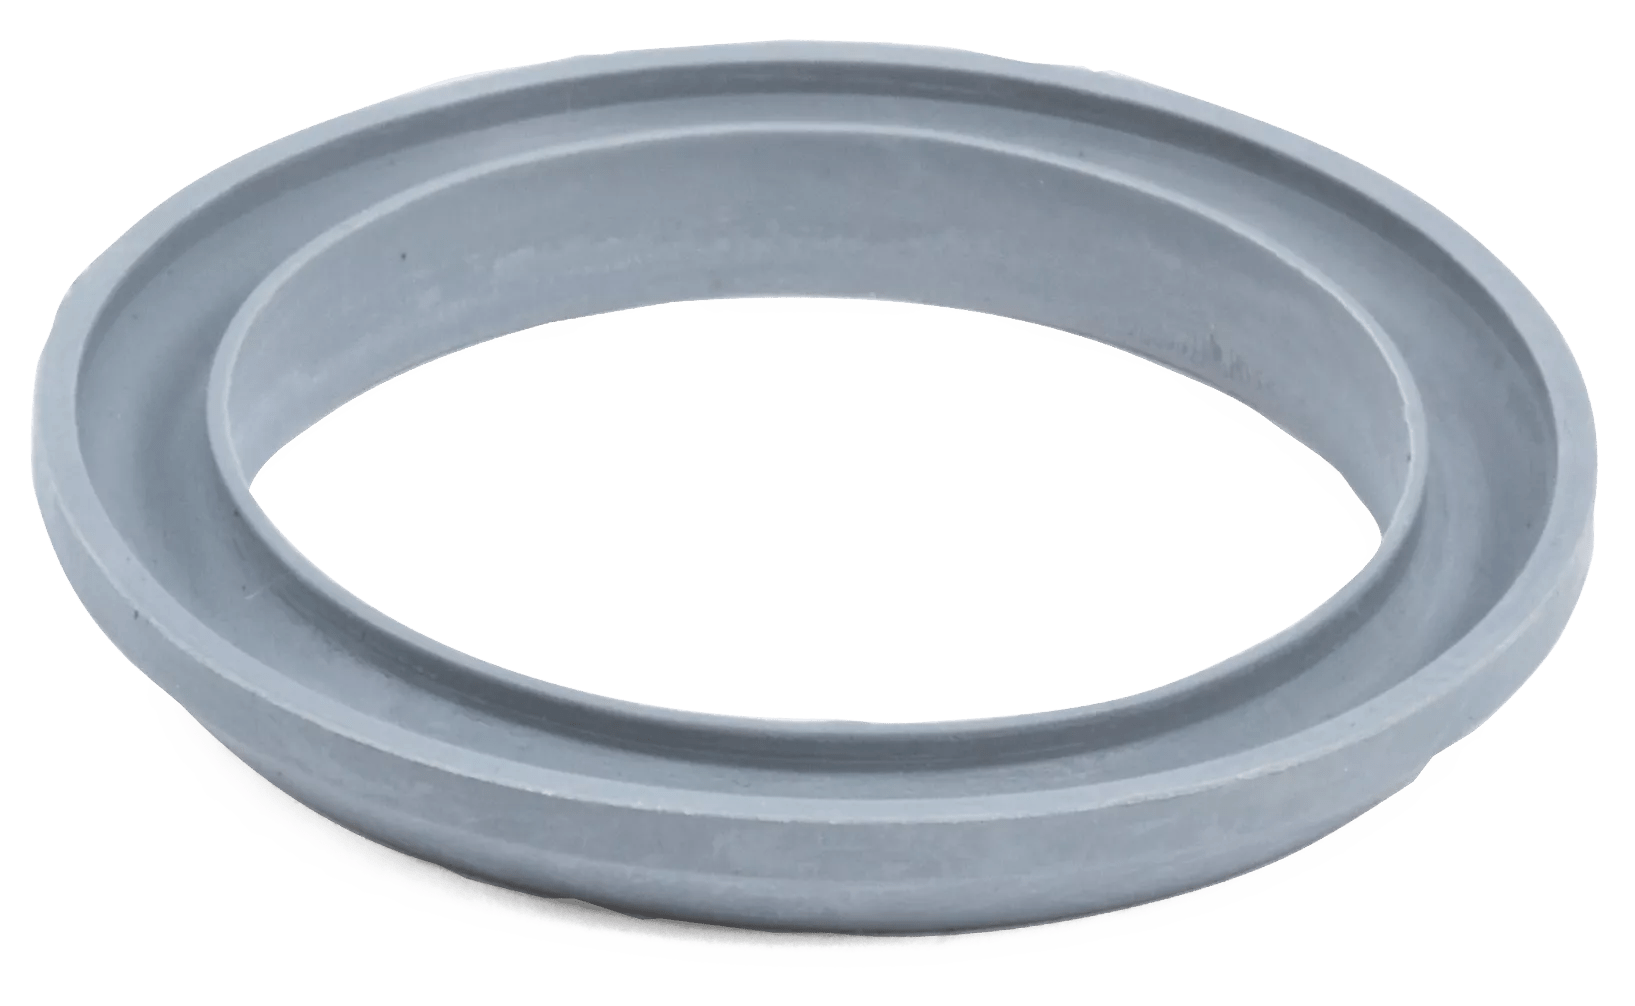 Gray Fluid (Brake Fluid & Coolant) Transfer Pump Replacement Seals